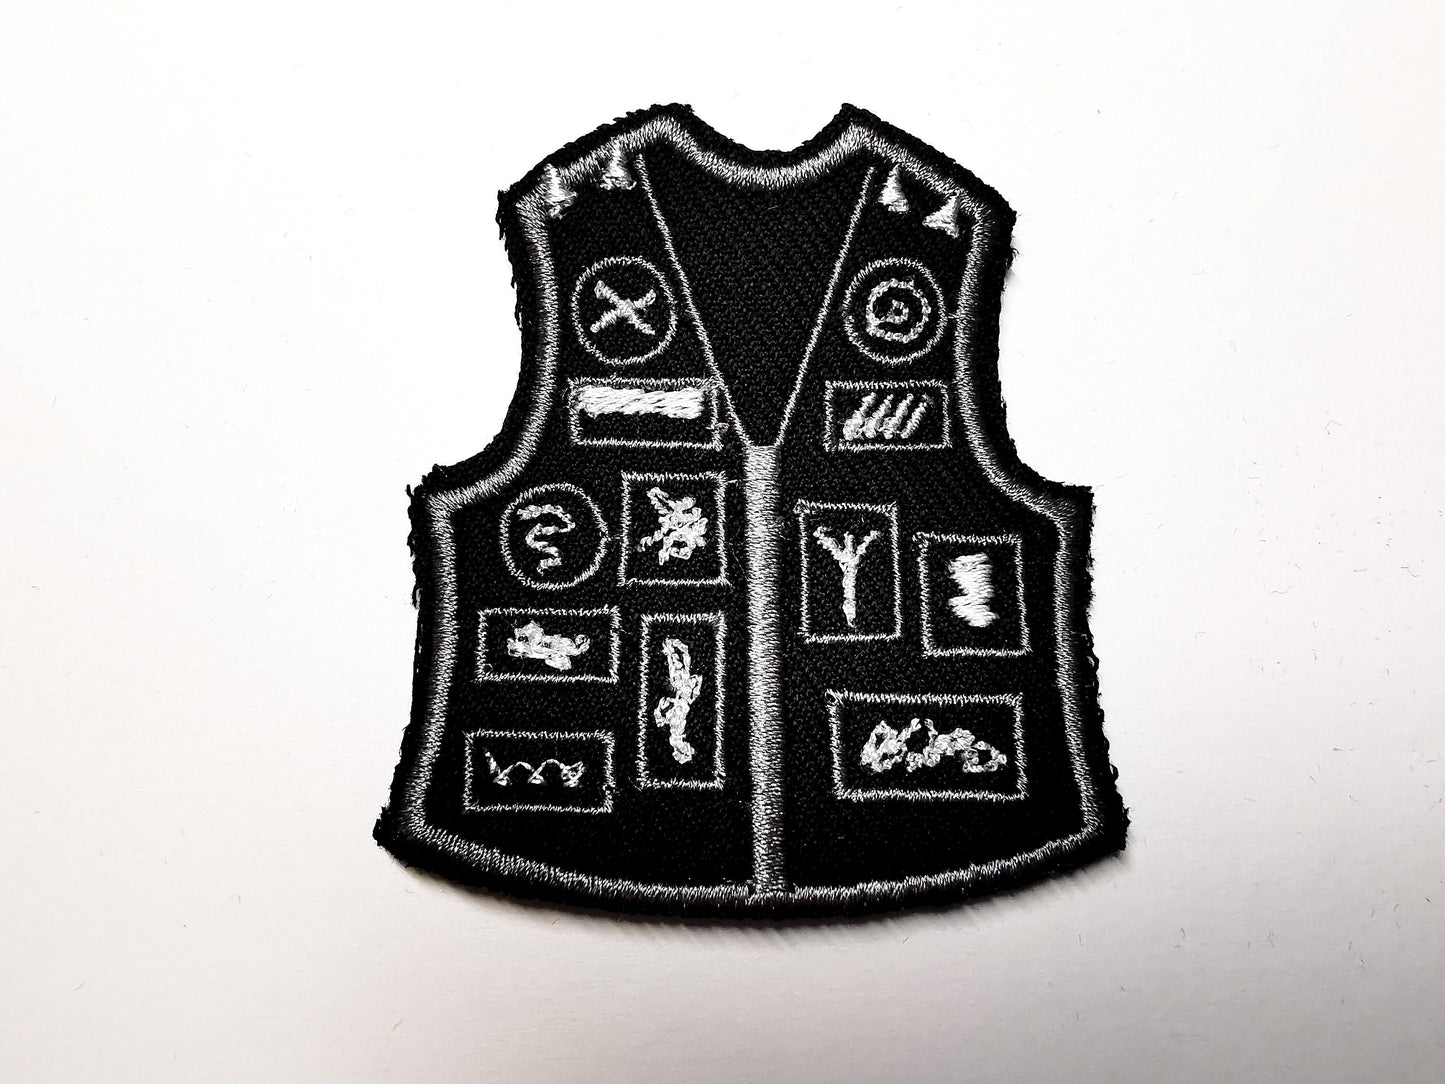 Battle Jacket Embroidered Patch Jacket Parody Death Metal Black Metal Patch Thrash Metal Viking